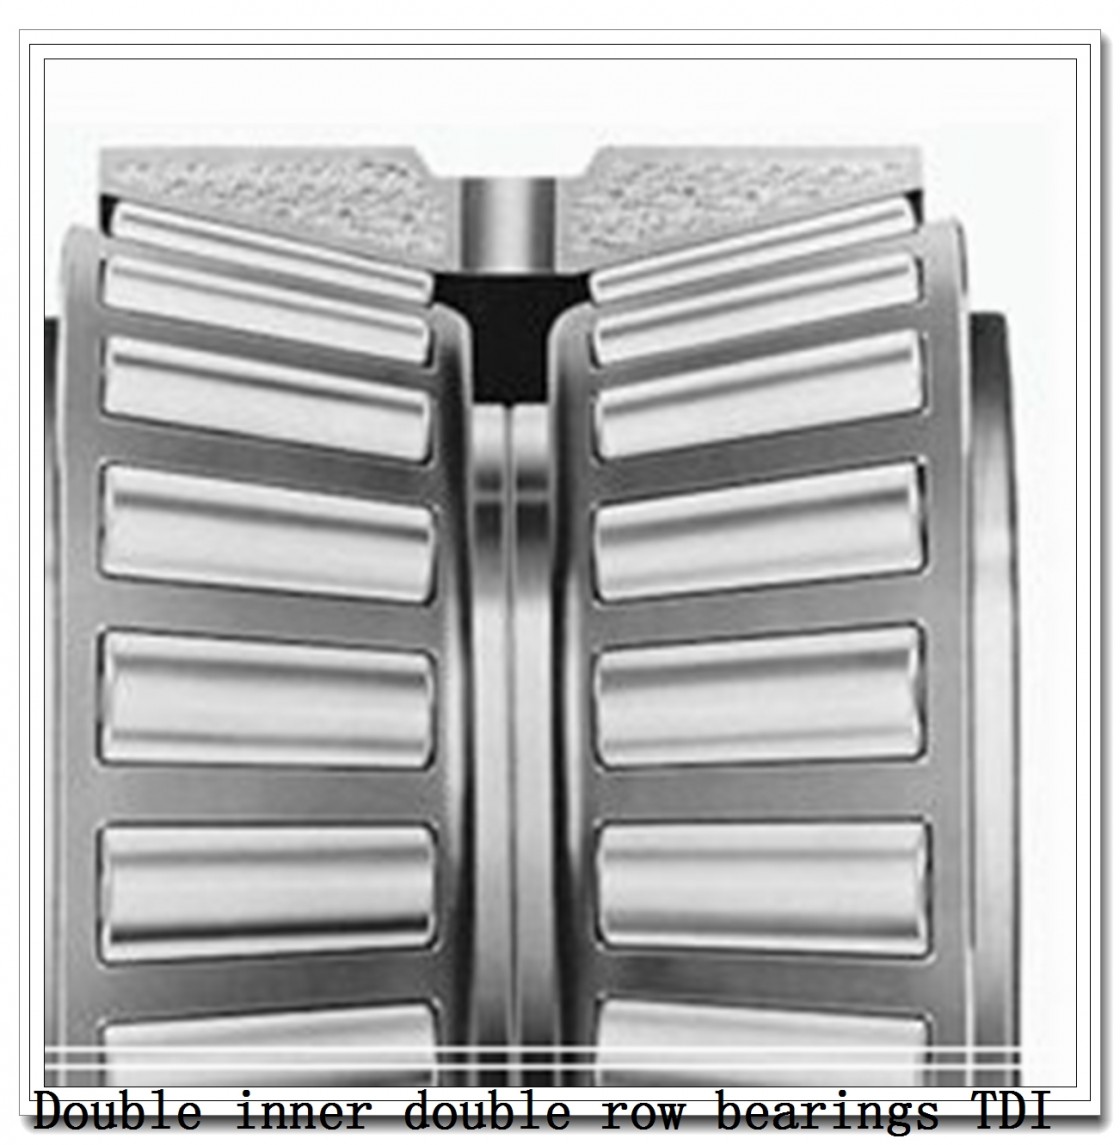 1050TDO1390-2 Double inner double row bearings TDI